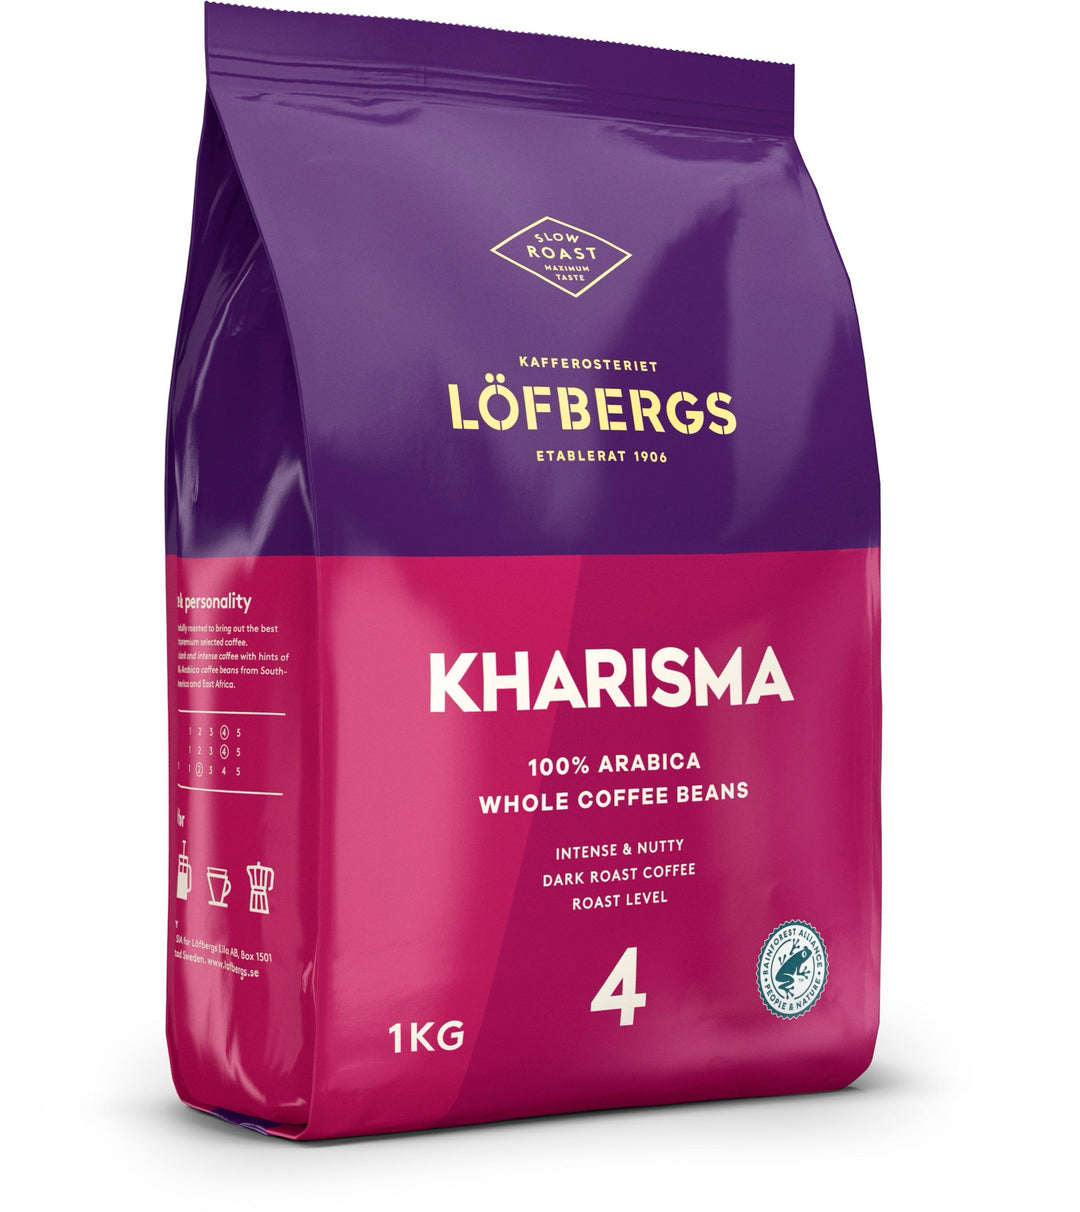 Kharisma kahvipavut 1kg (uusi pakkaus)